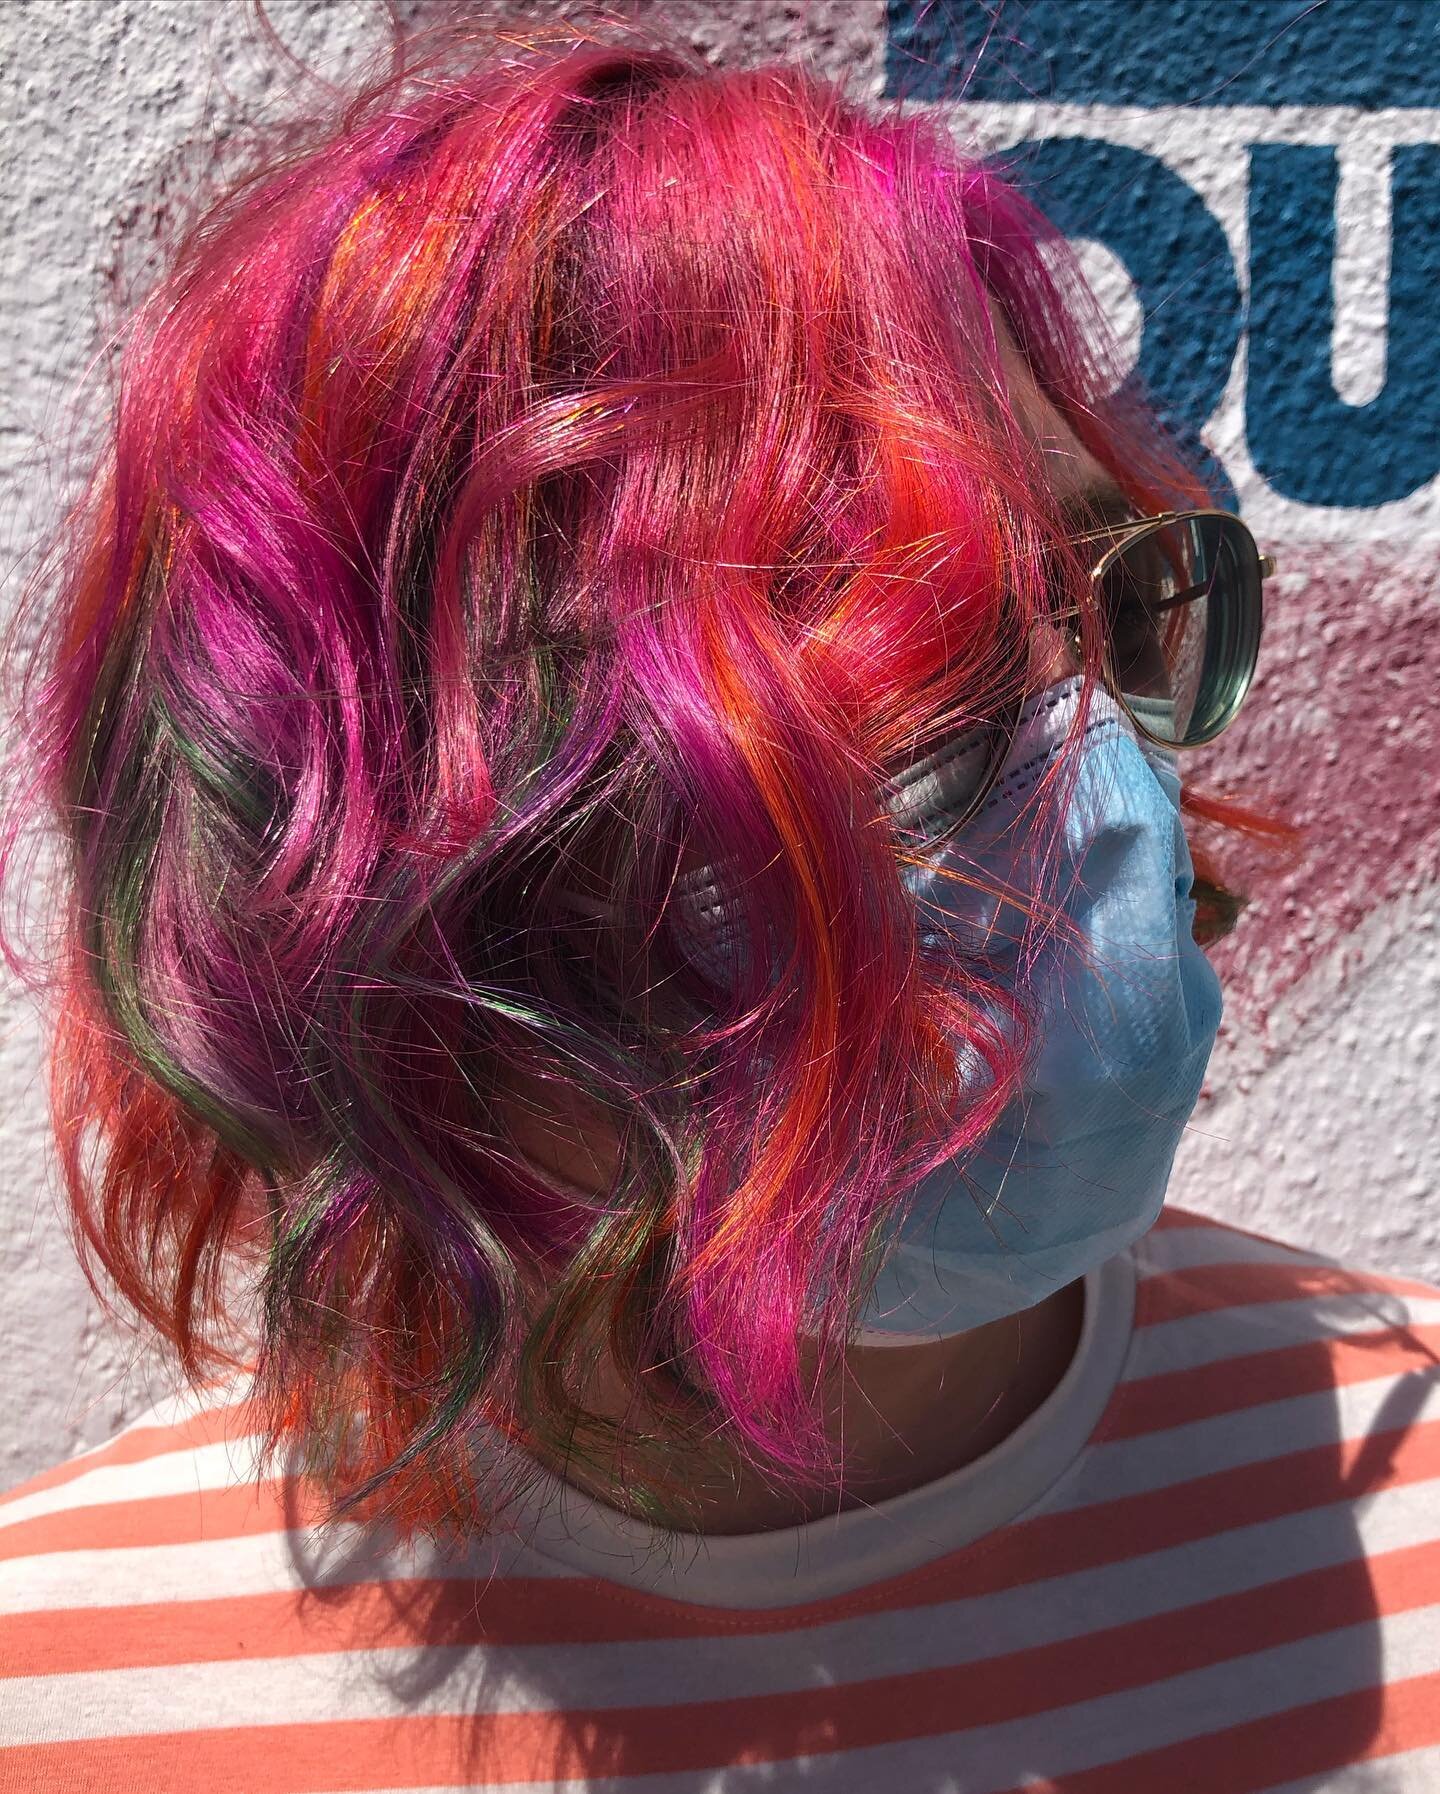 Tie Dye hair by @hairbysus 
Styled with @cultandking Set Spray and Jelly 
#hairbysus #tumbleweedhairparlour #prismhair #undercut #eurekastylist #humboldtcounty